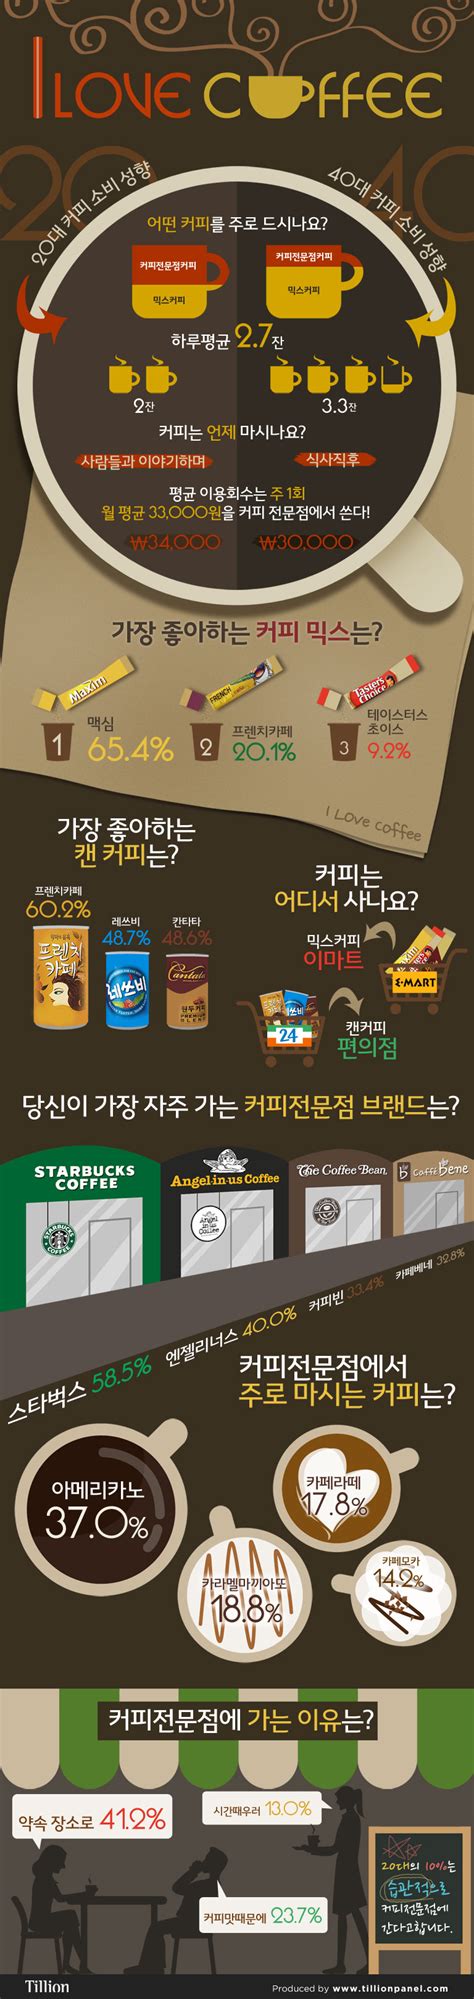 I Loooove Coffree! Favorite coffee in Kore… | Coffee korea, Coffee, Coffee lover